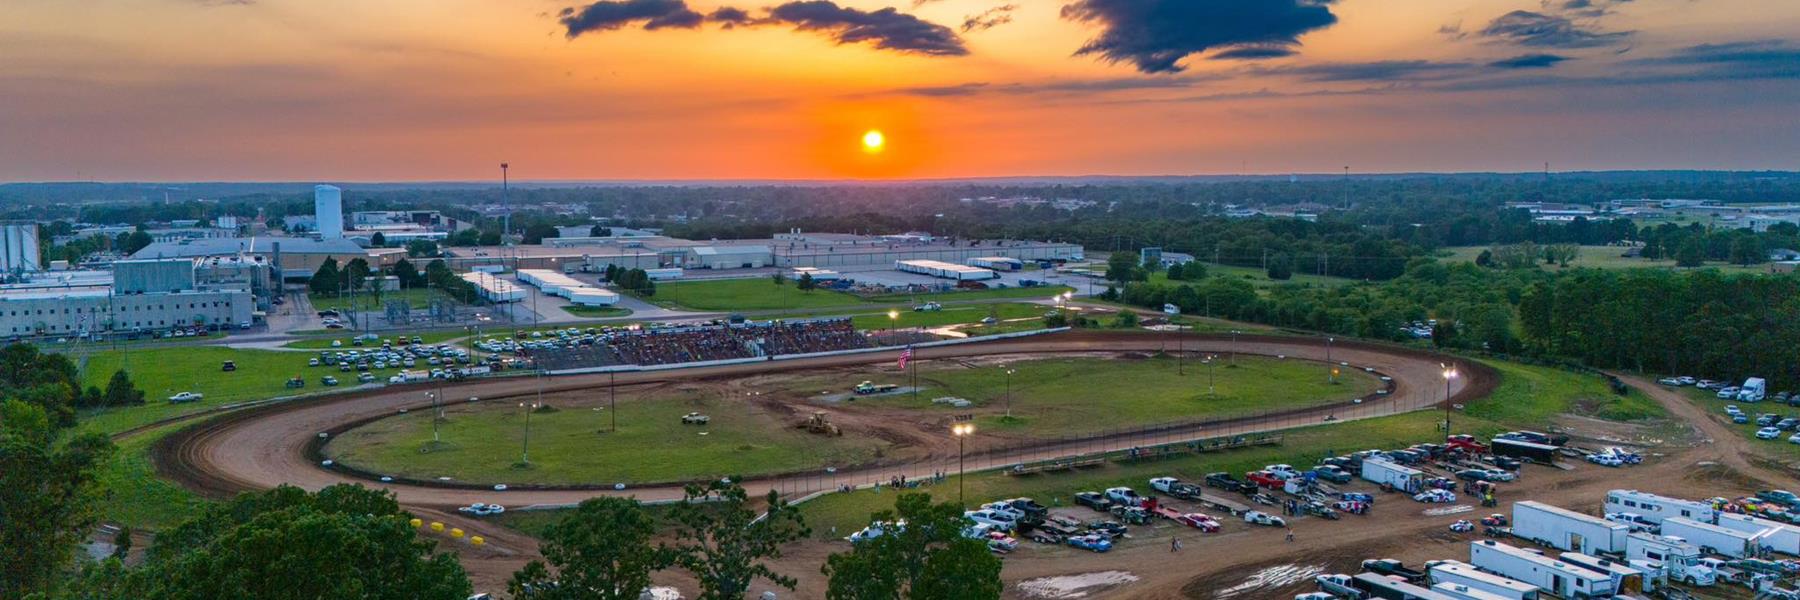 5/21/2017 - Monett Motor Speedway